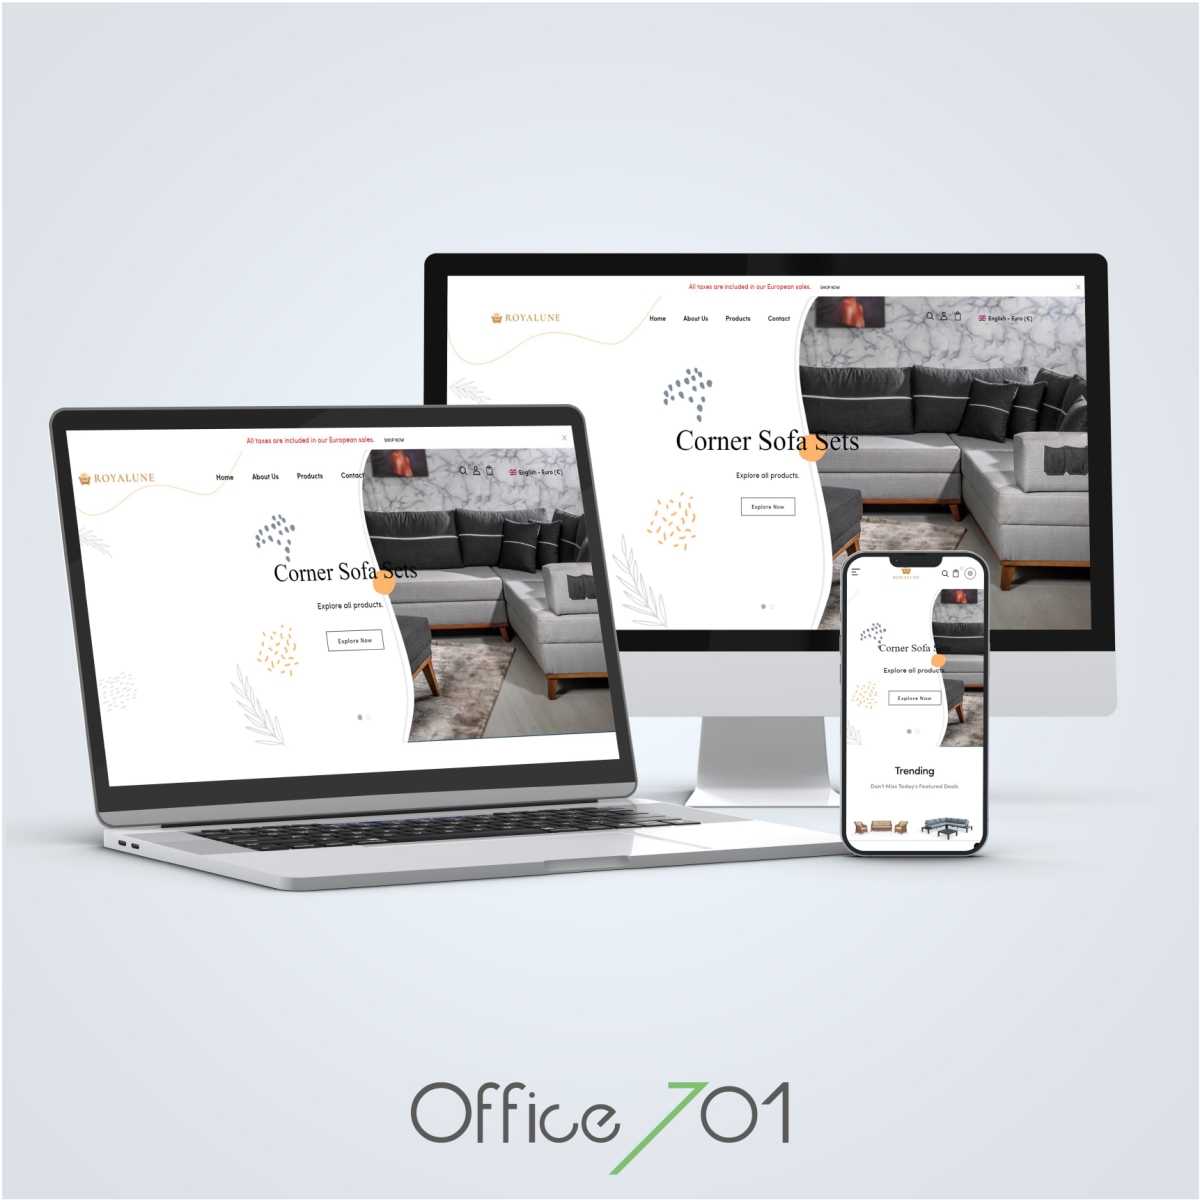 Office701 | Royalune Shopify E-Ticaret Sitesi